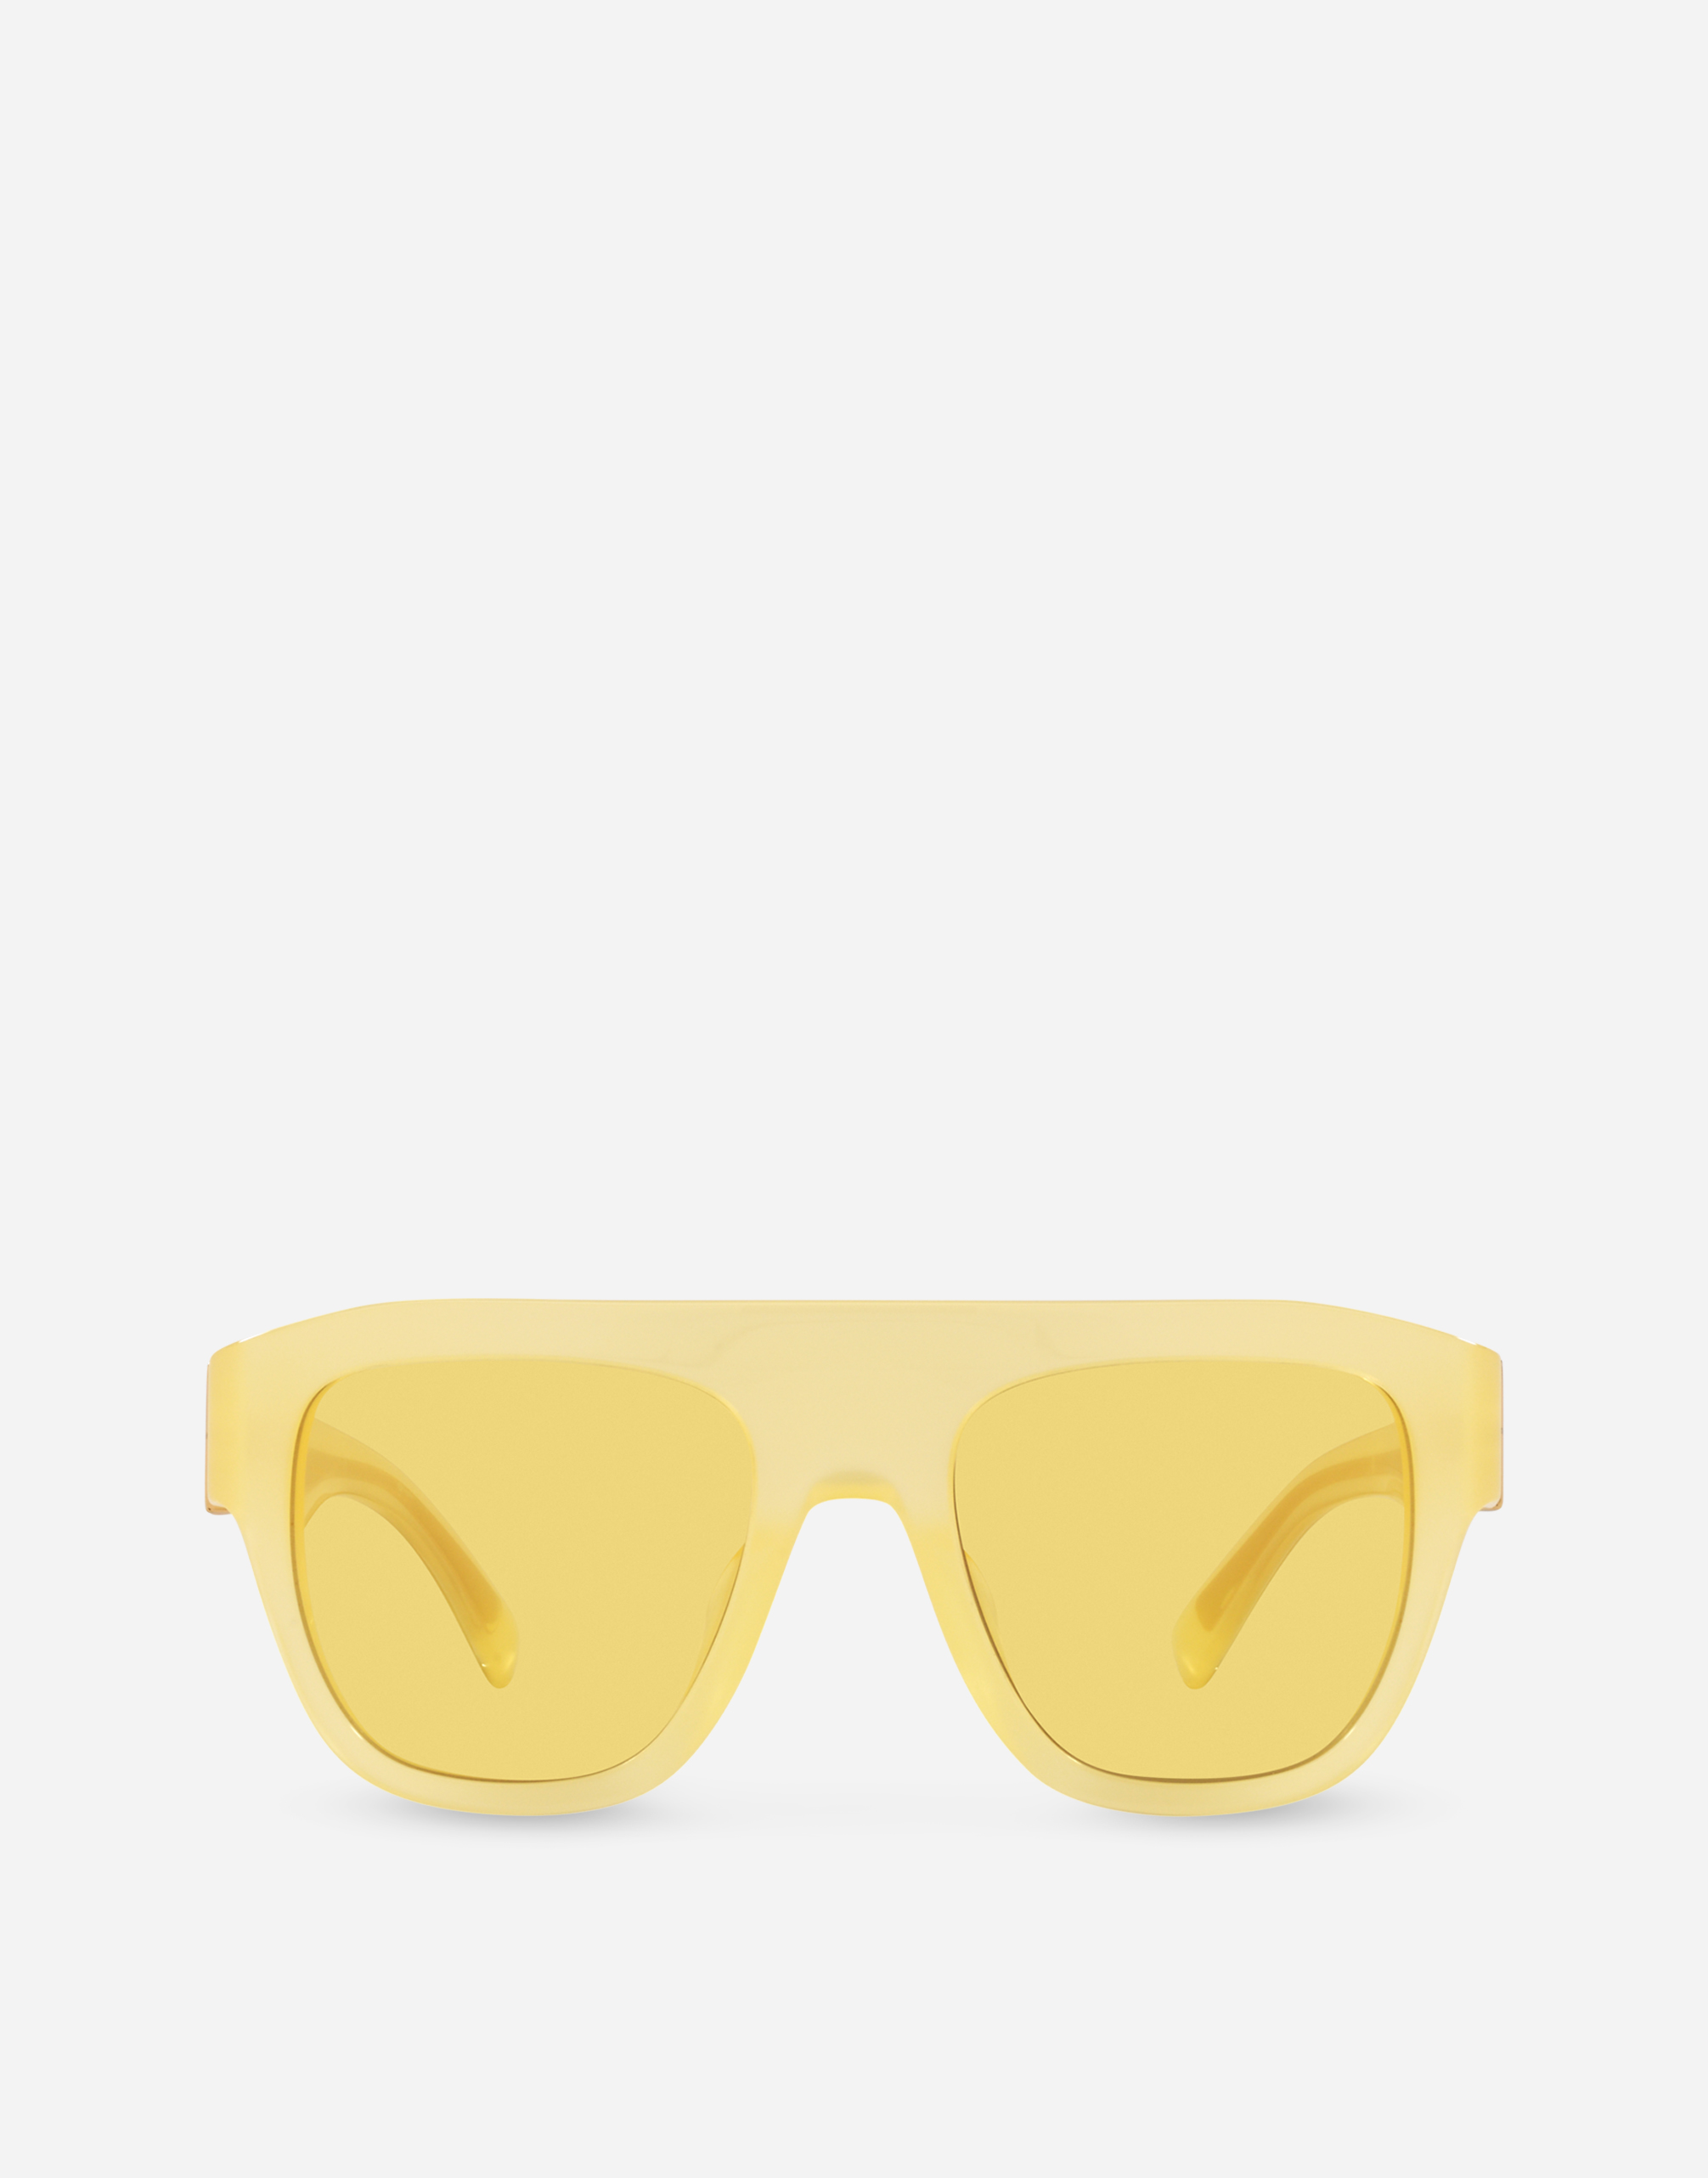 Renaissance sunglasses in Opal yellow